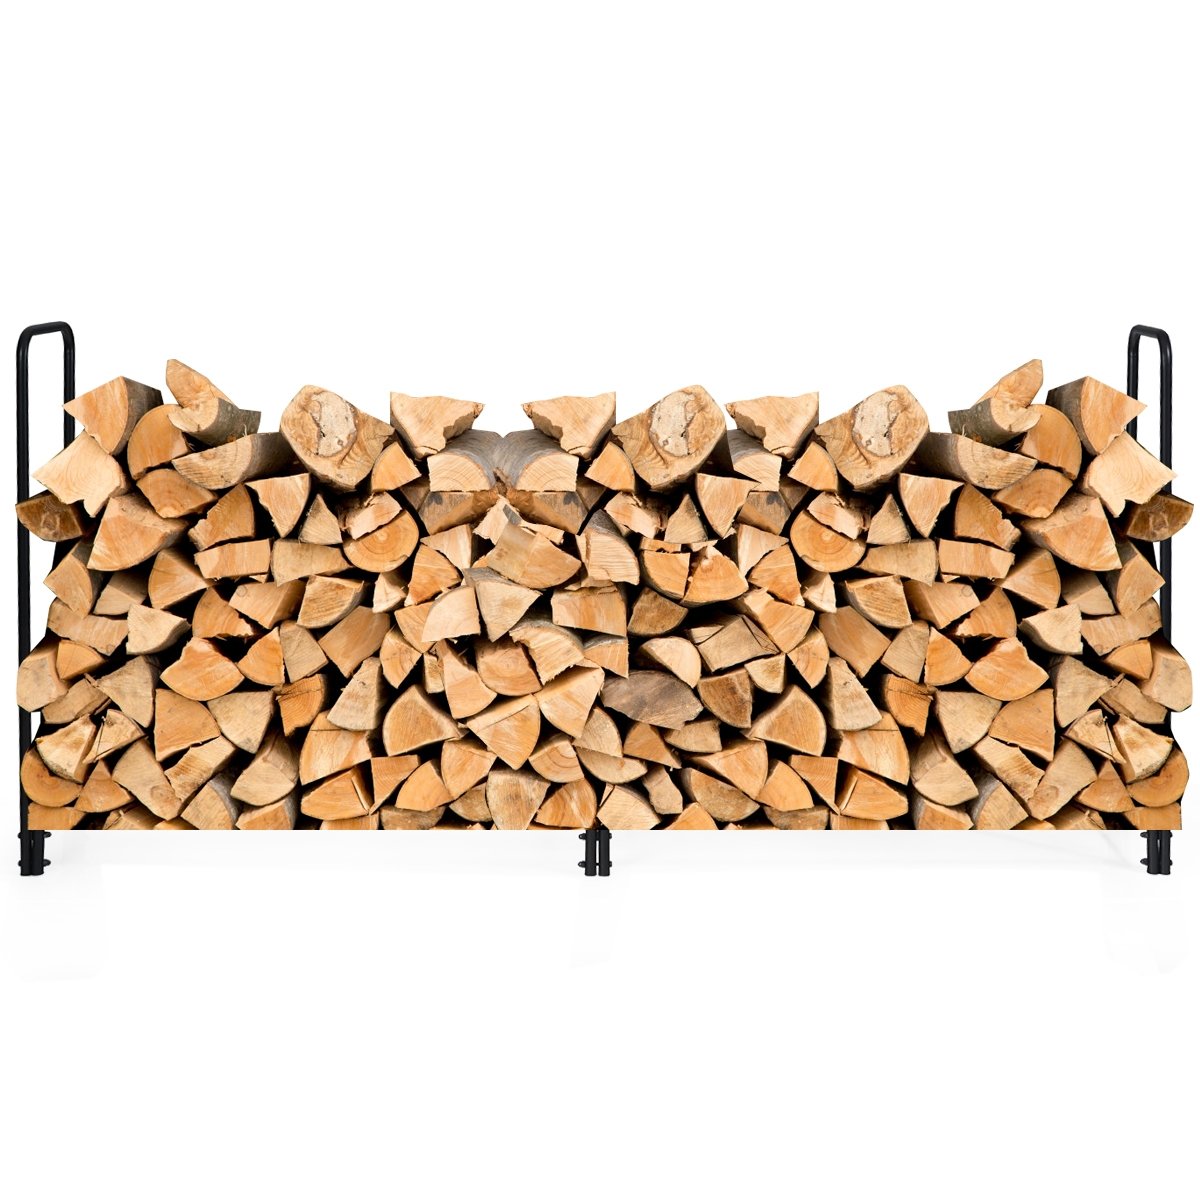 8 Feet Outdoor Steel Firewood Log Rack, Black at Gallery Canada